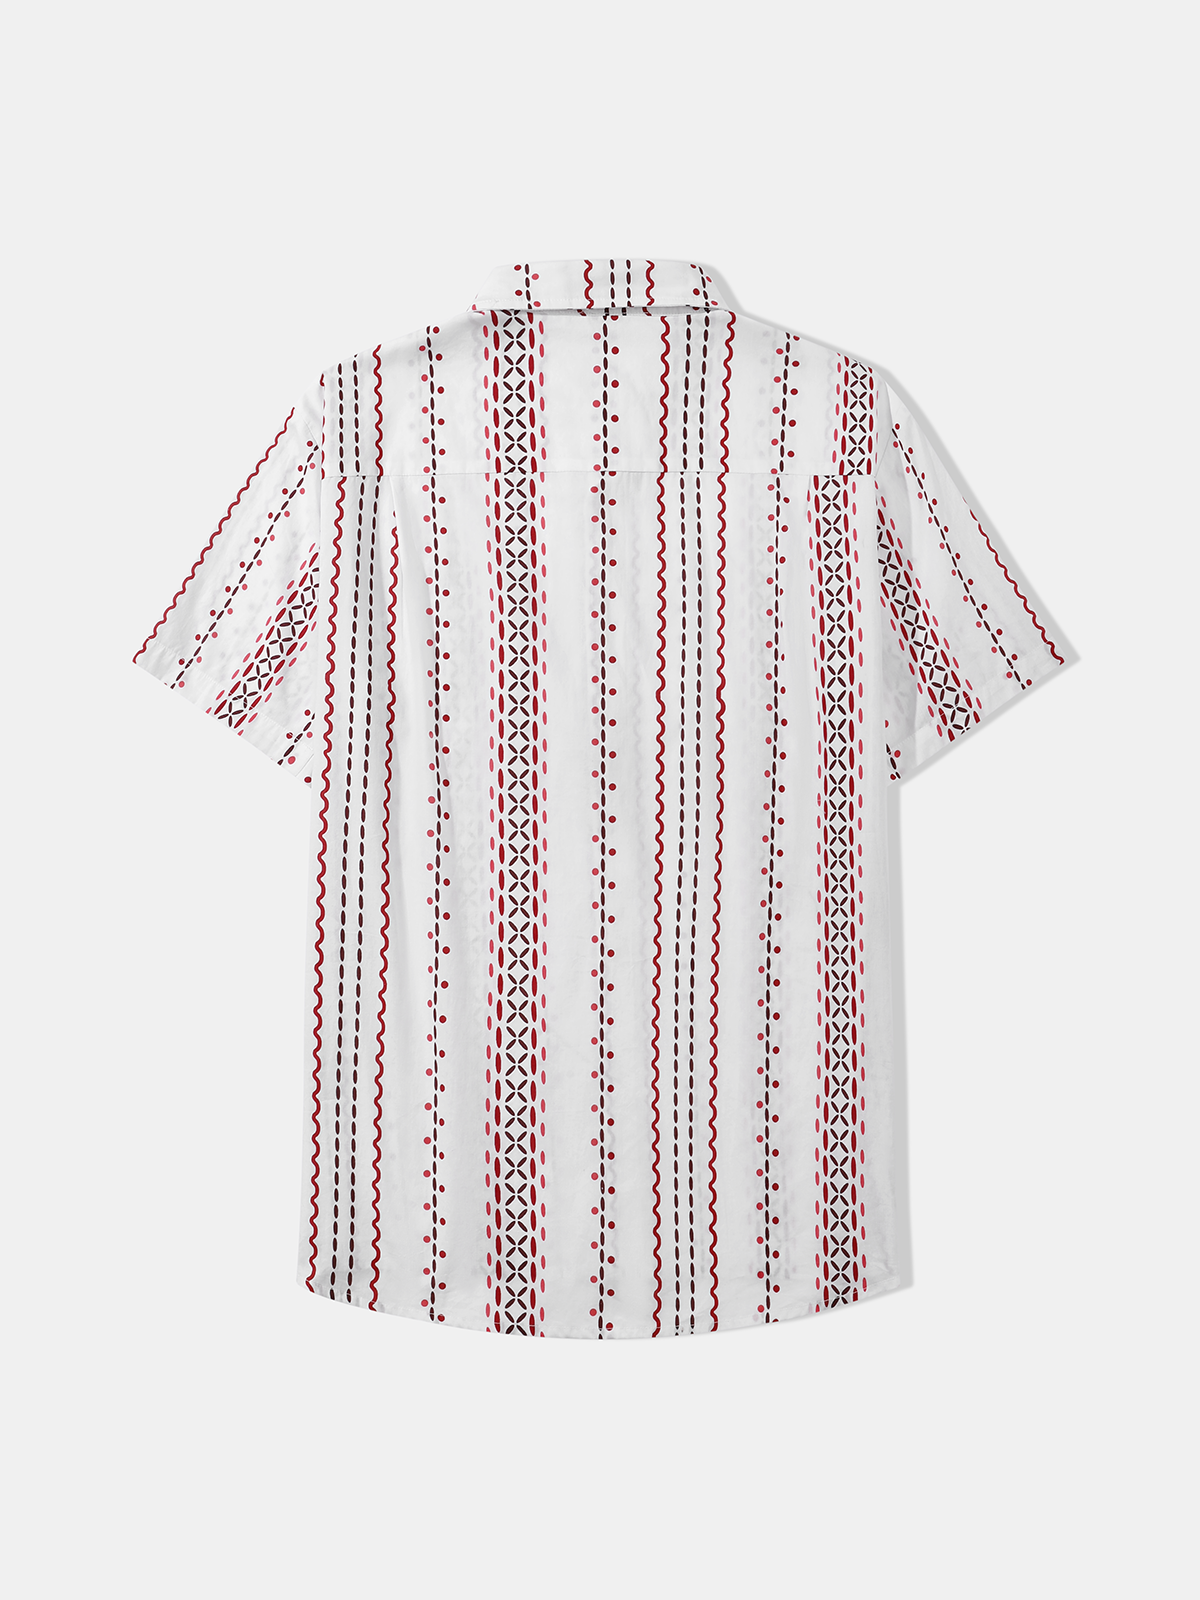 Hardaddy® Cotton Geomatric Resort Shirt